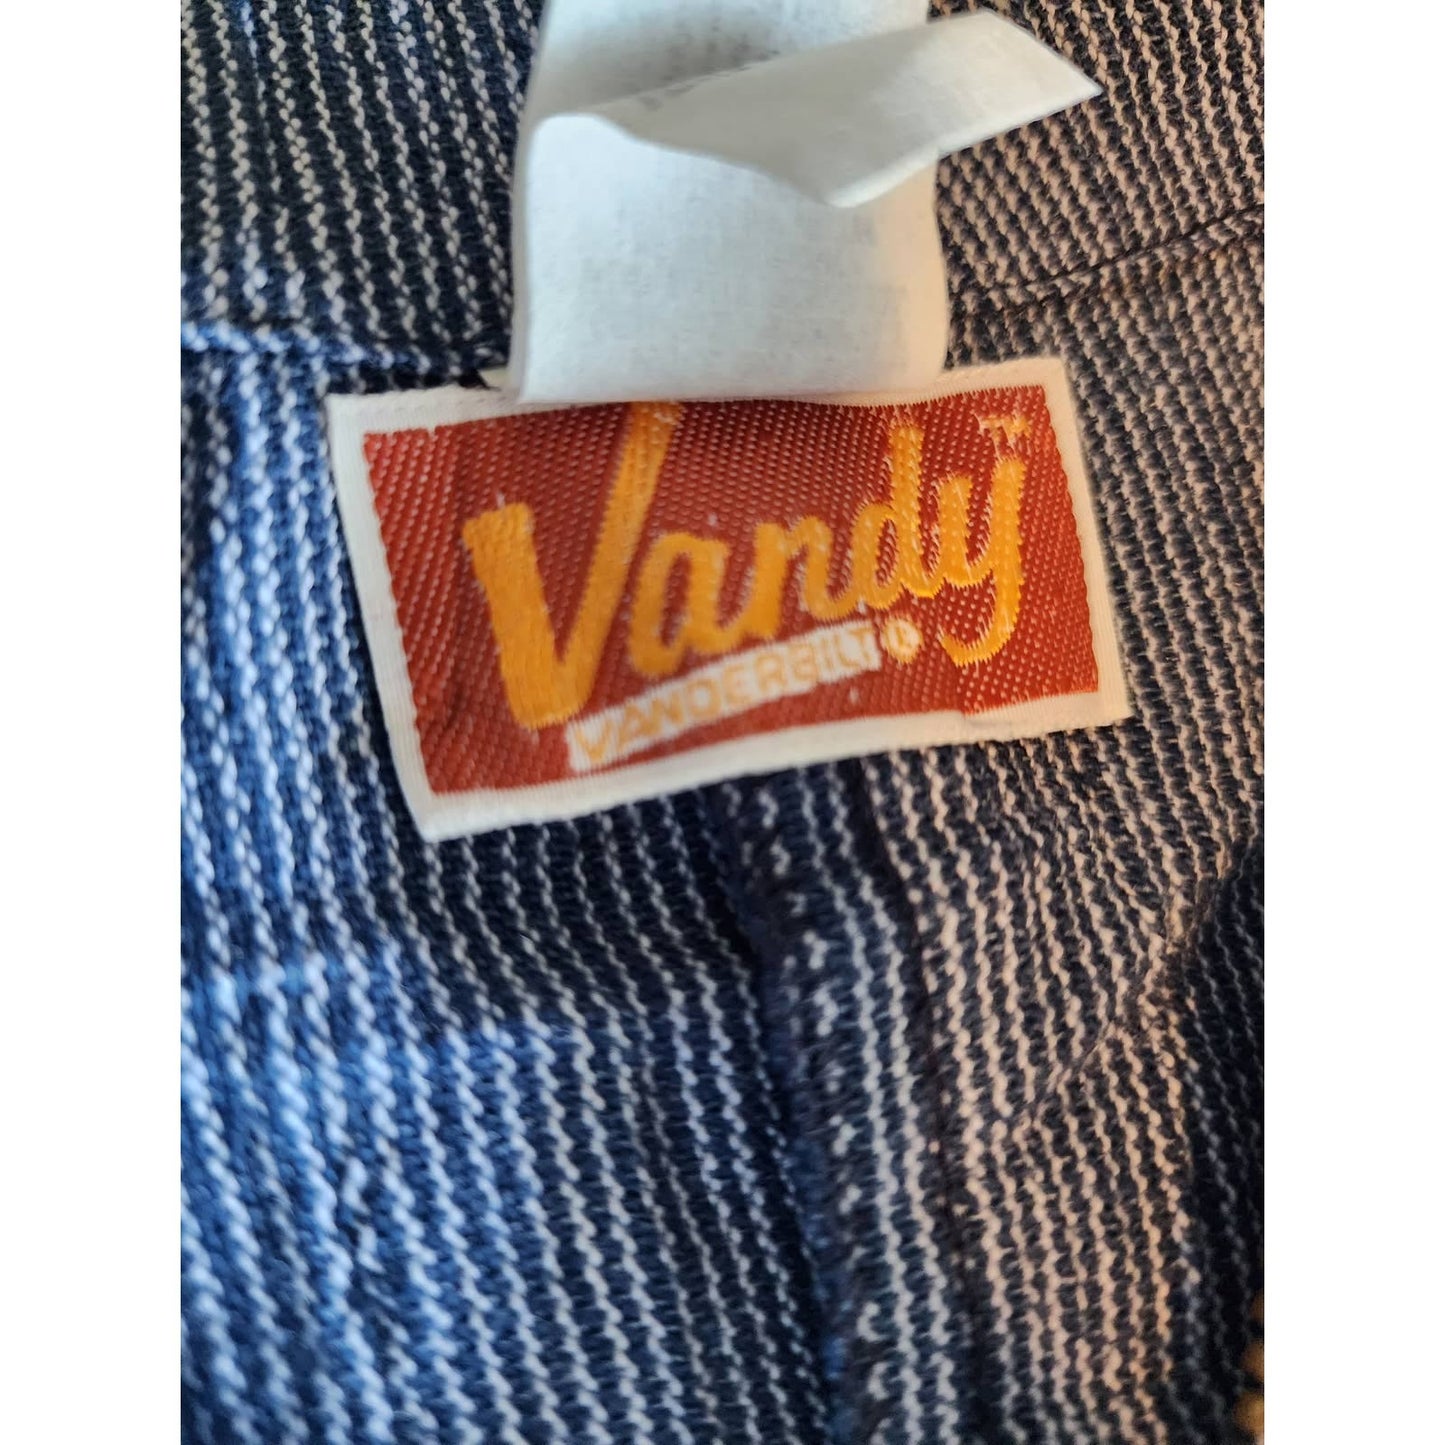 Vintage  Vandy by Lady Vanderbilt Pinstripe Seersucker Sailor Suit Deadstock